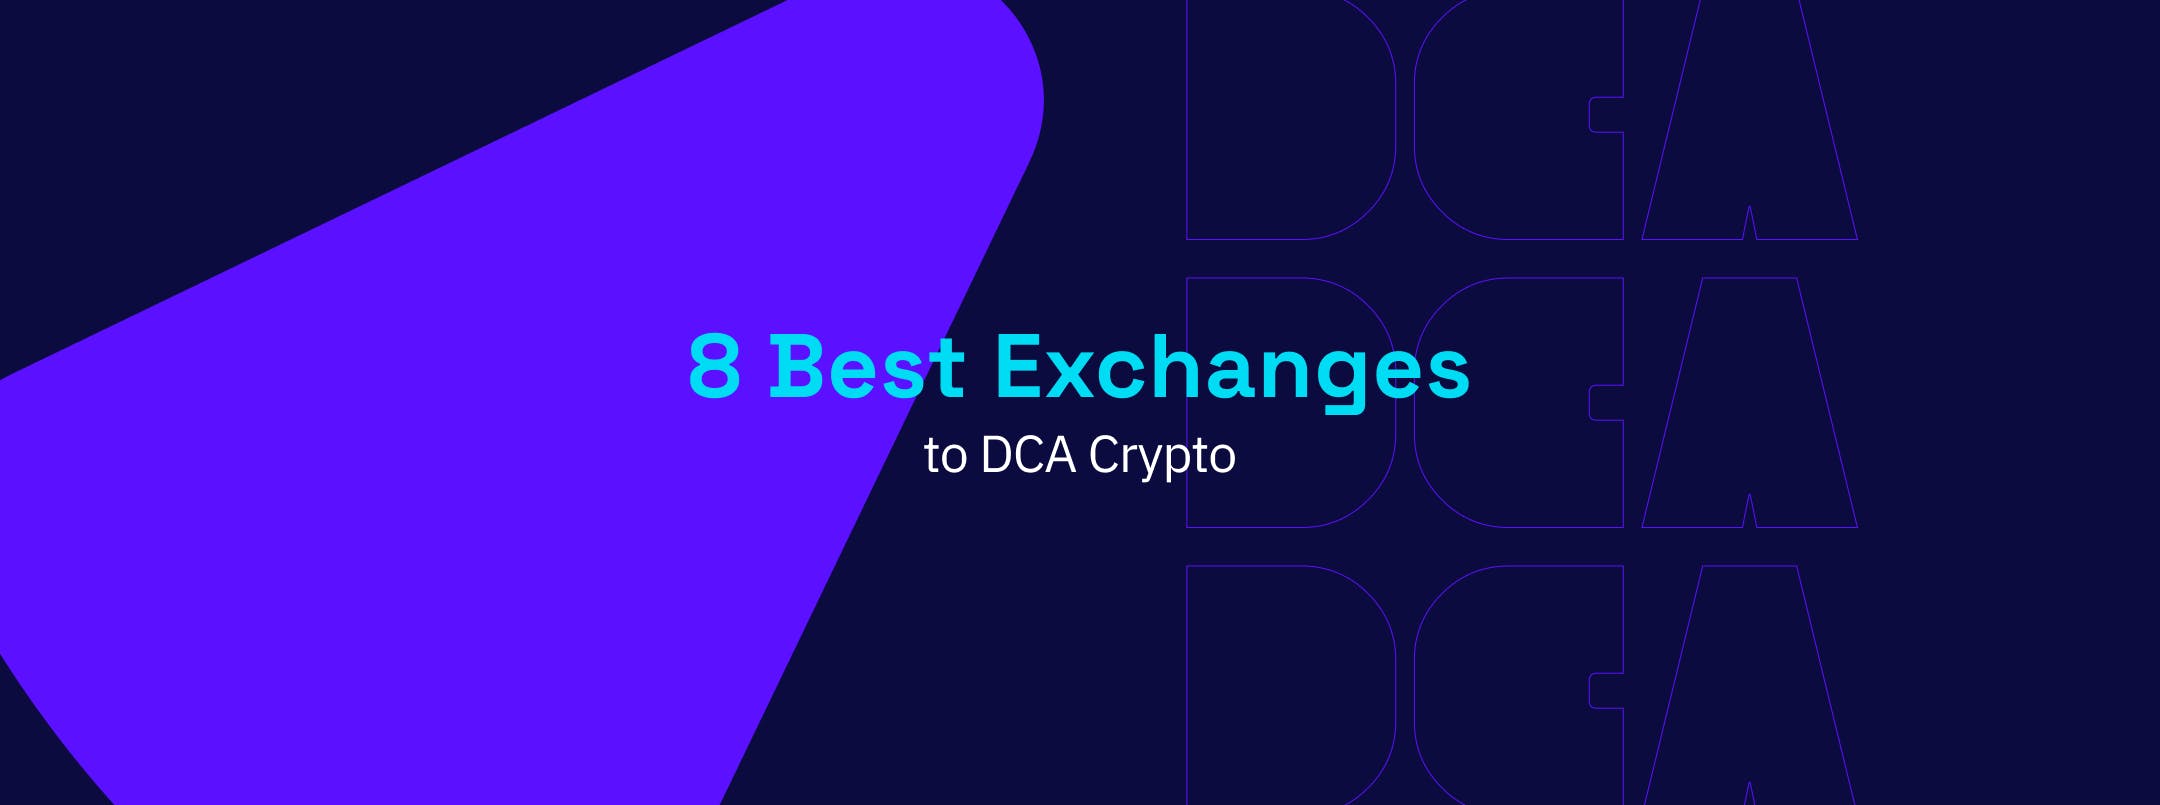 8 Best Exchanges to DCA Crypto